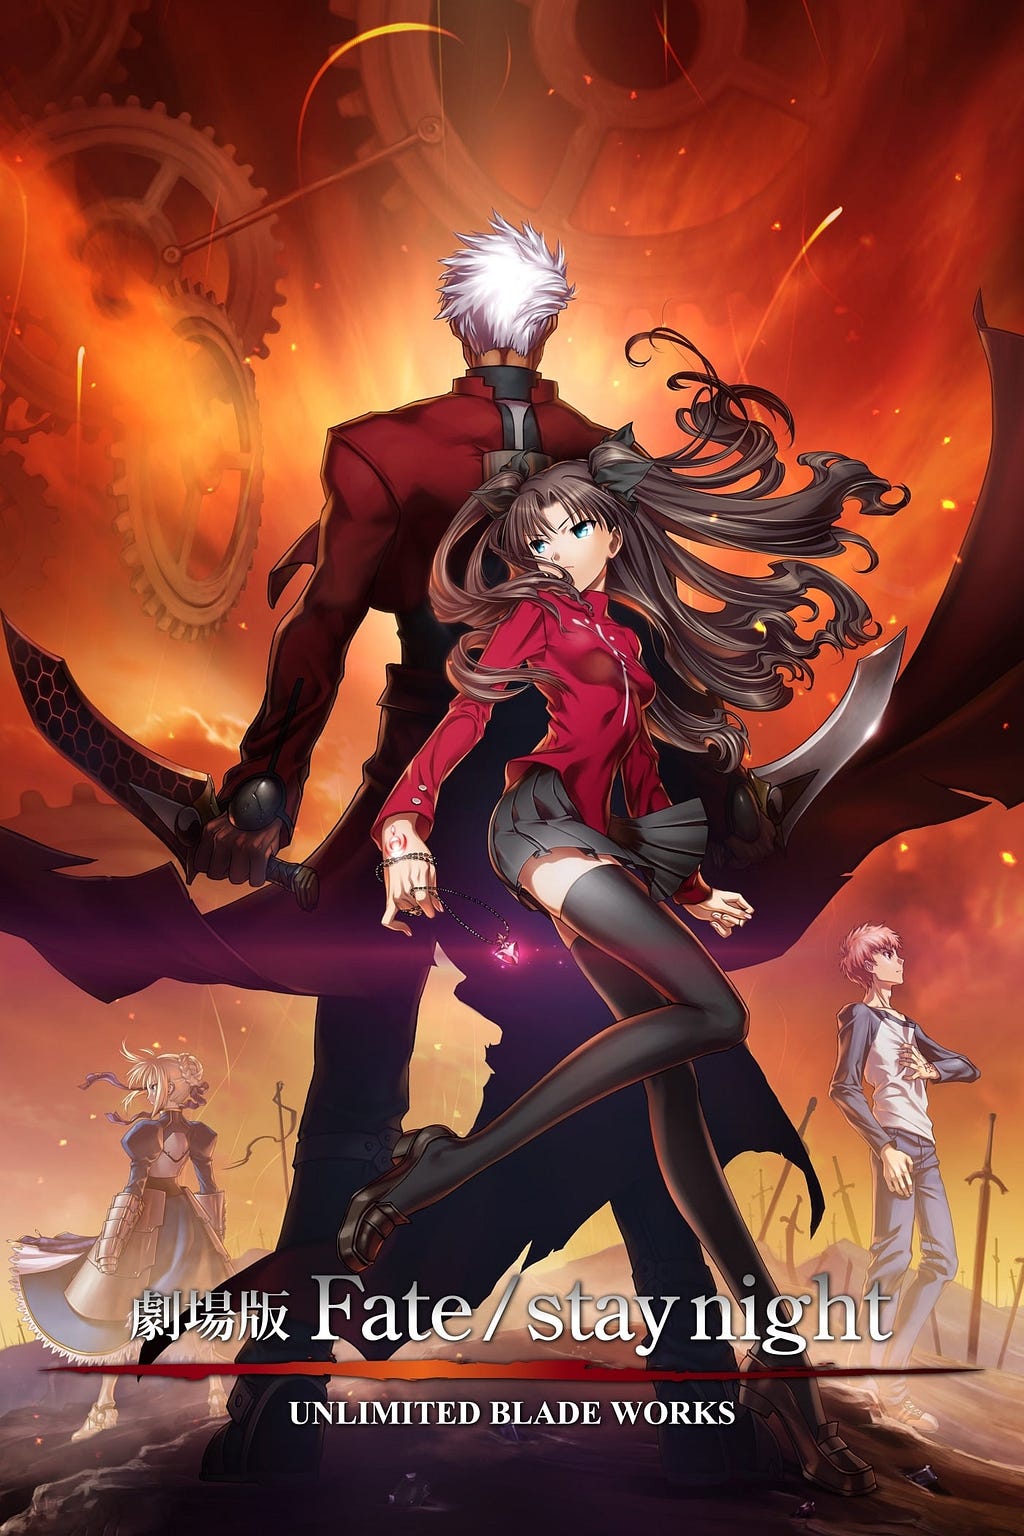 Gekijouban Fate/Stay Night: Unlimited Blade Works (2010) | Poster